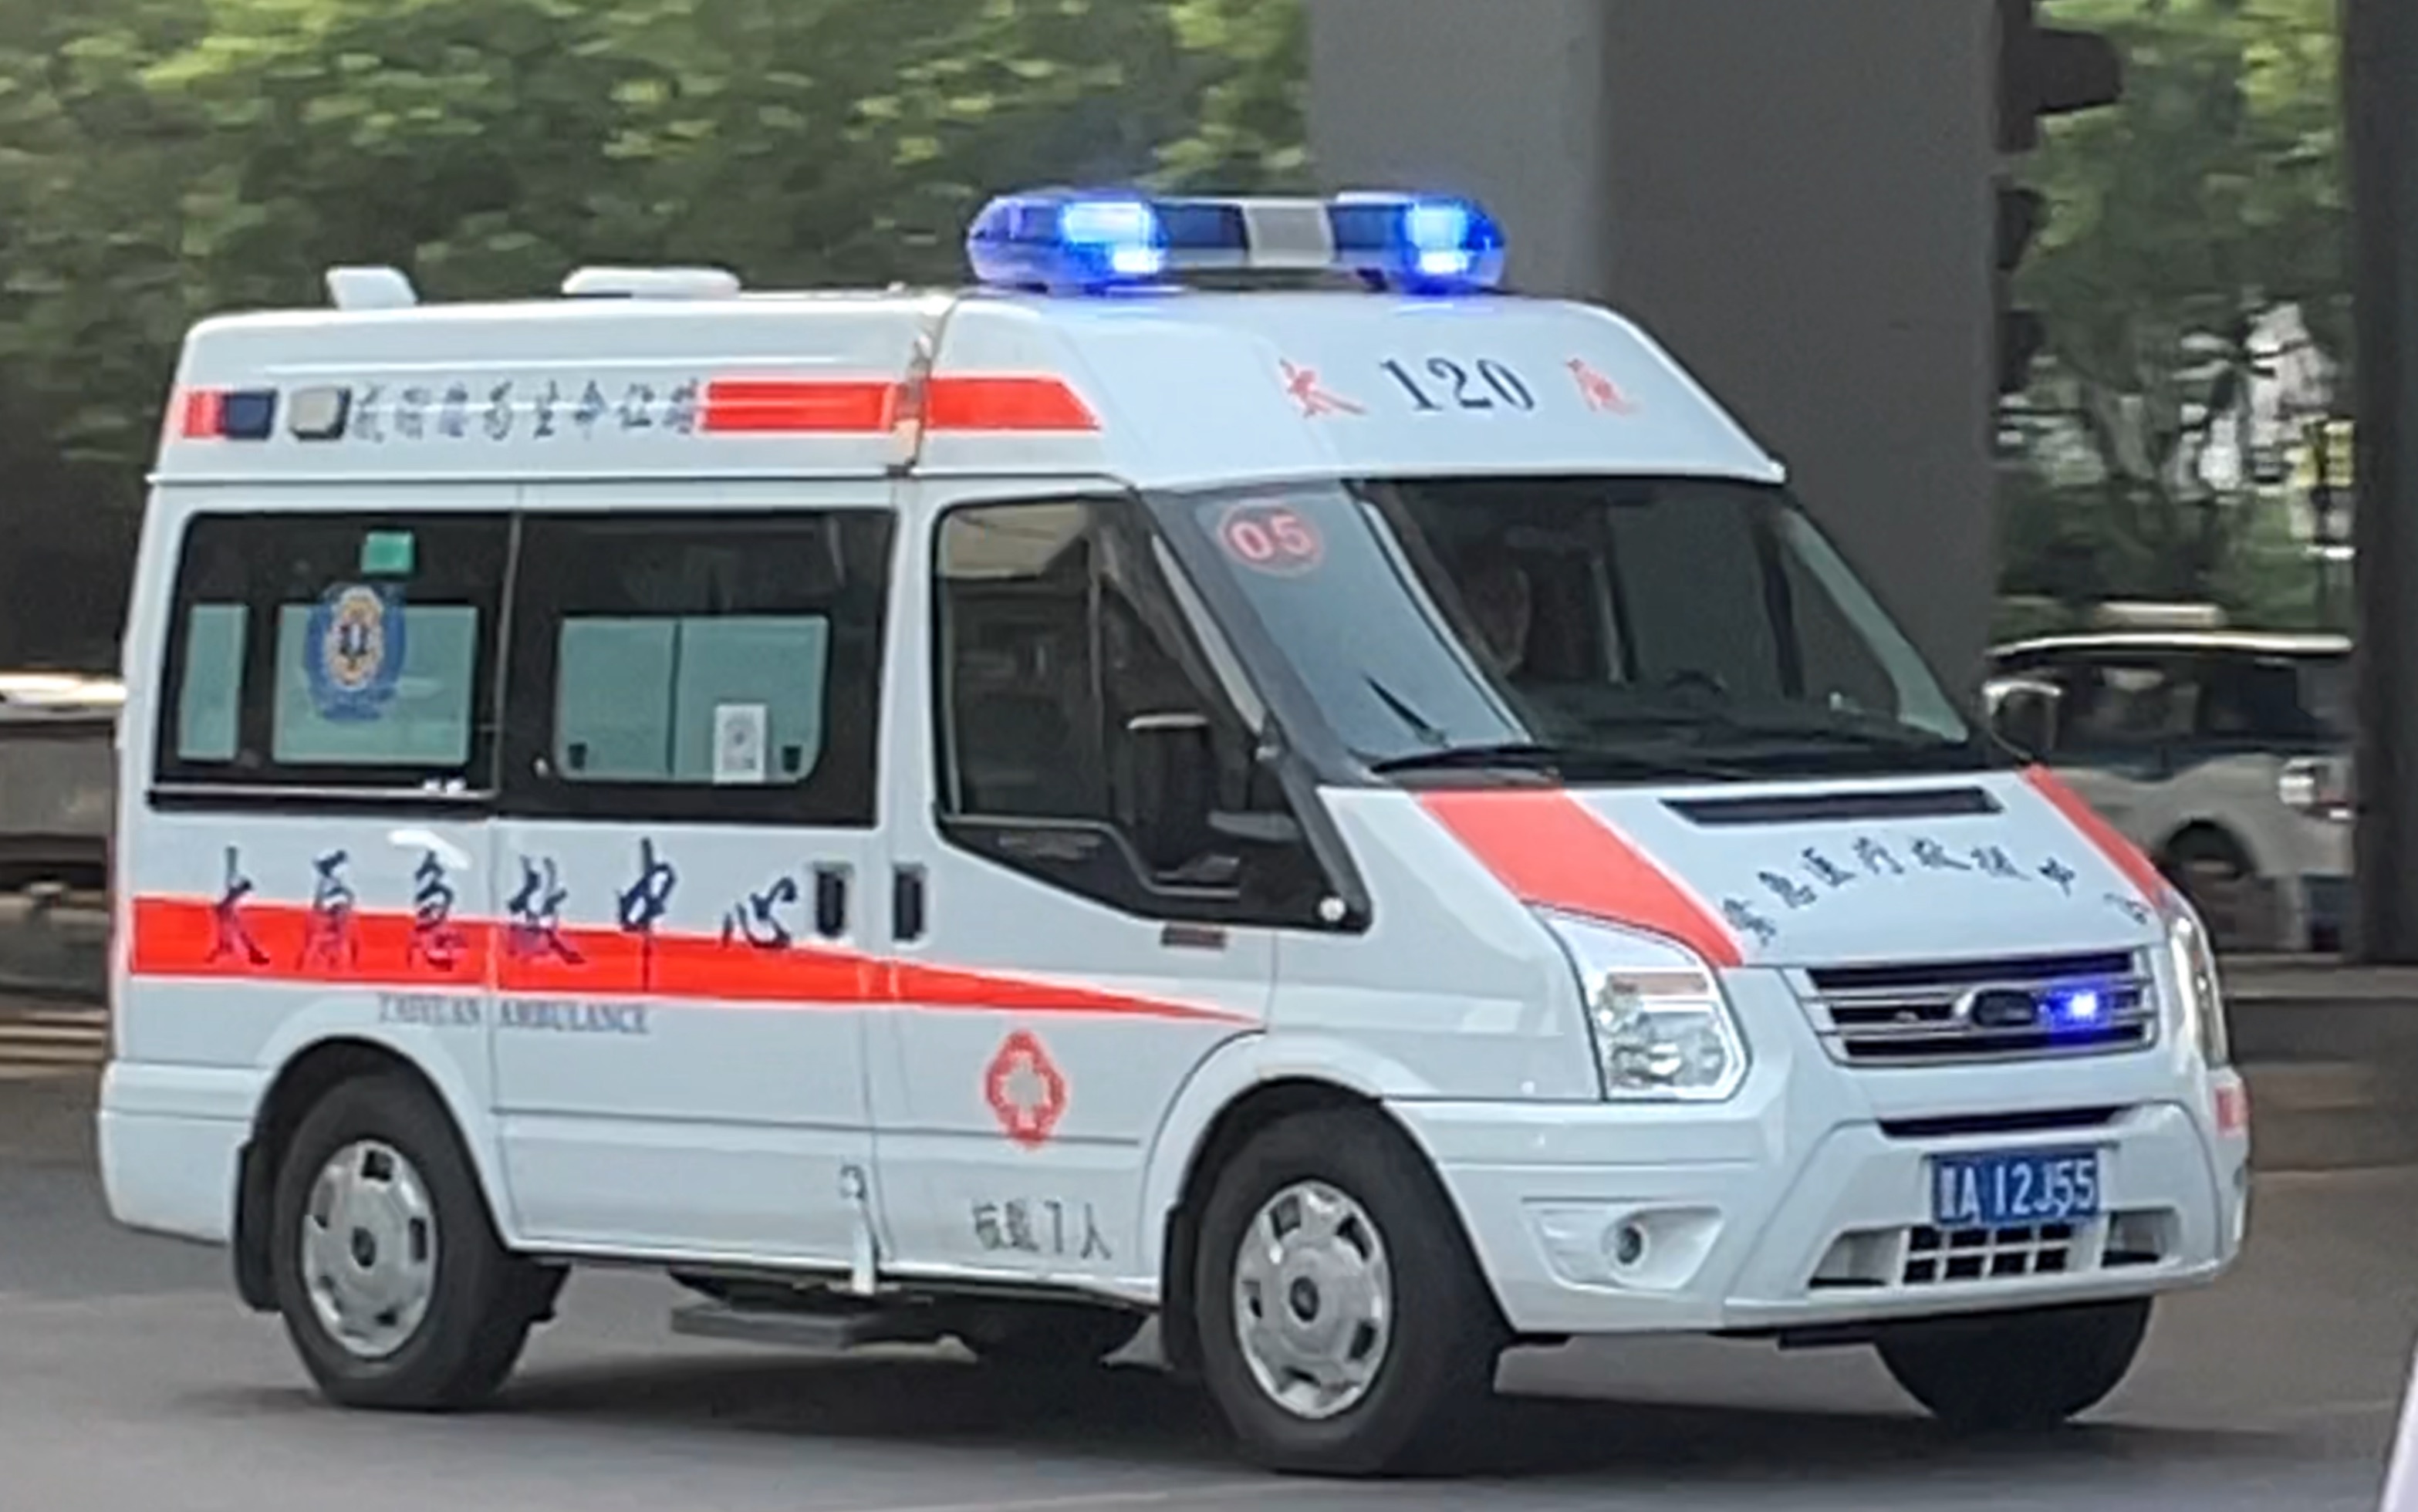 【First responders】太原市煤炭中心医院急救车code3开启警灯+警笛经过路口  过往车辆进行礼让